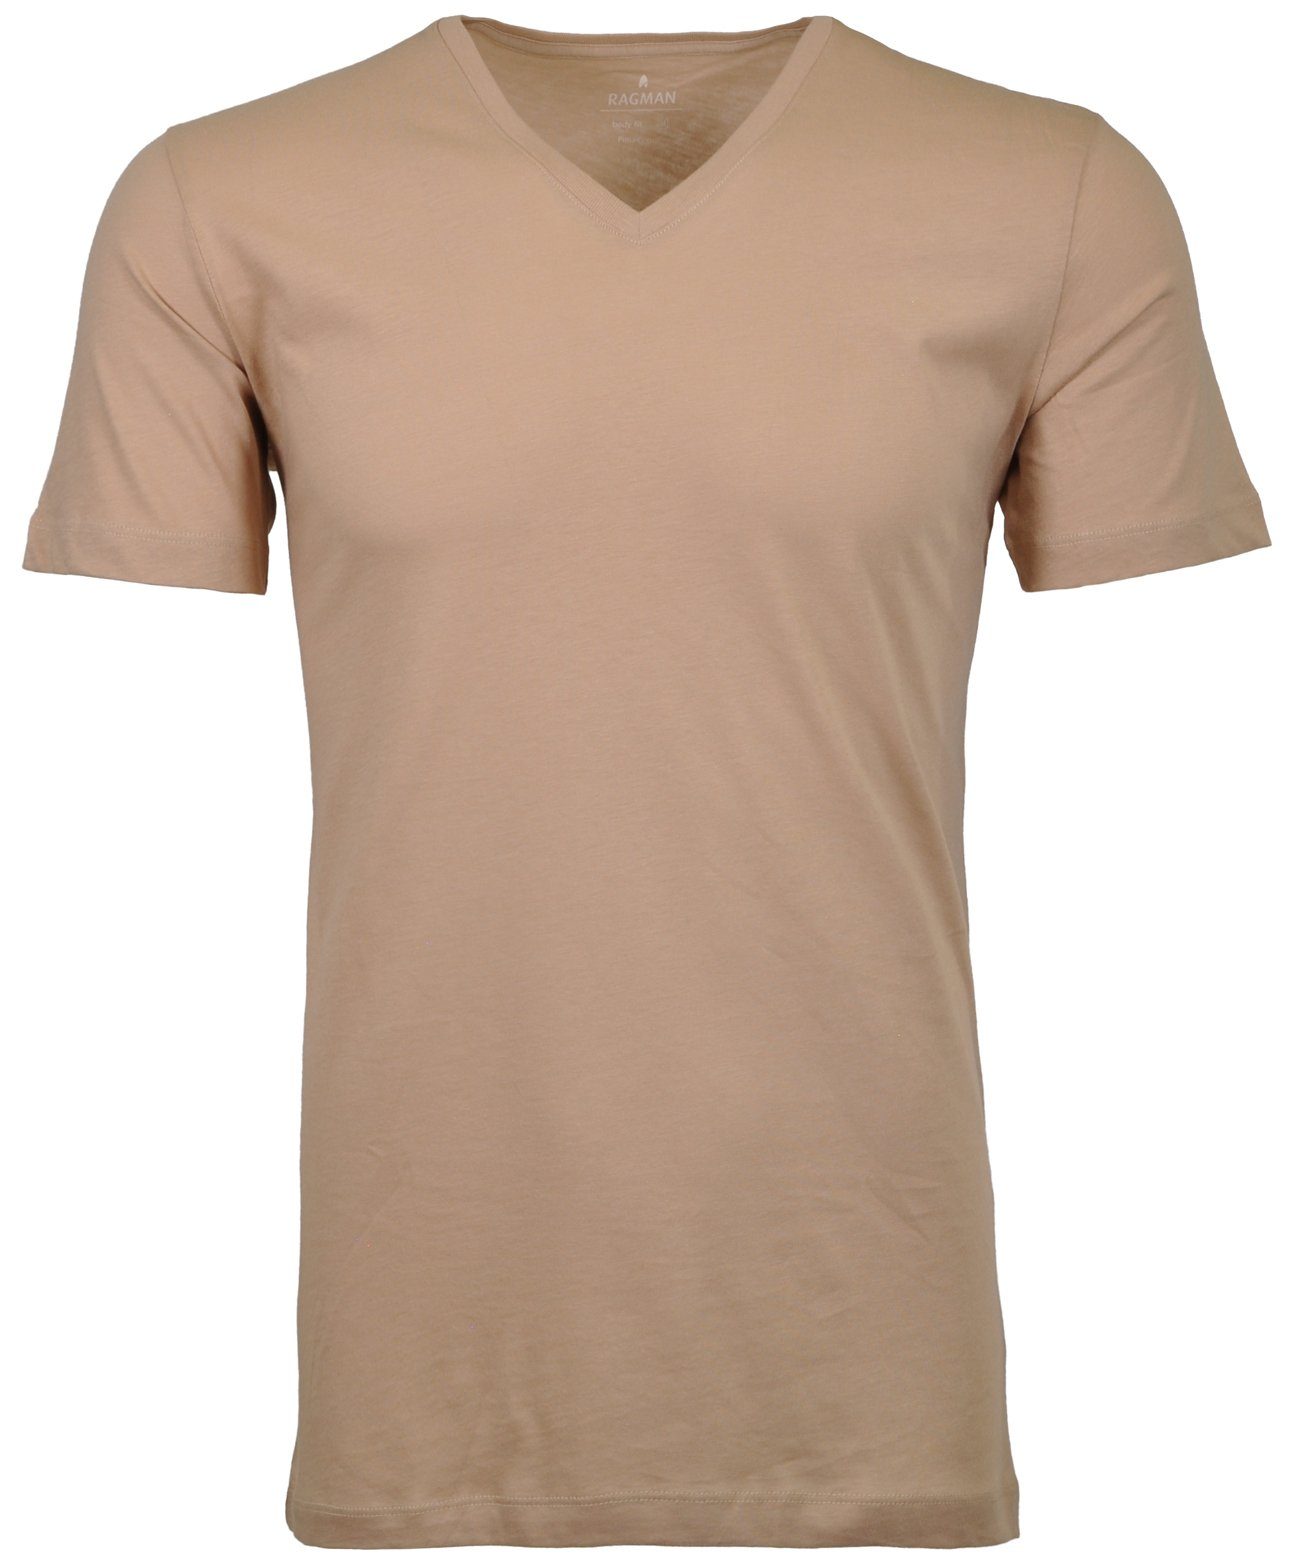 RAGMAN T-Shirt (Packung) Light Skin-086